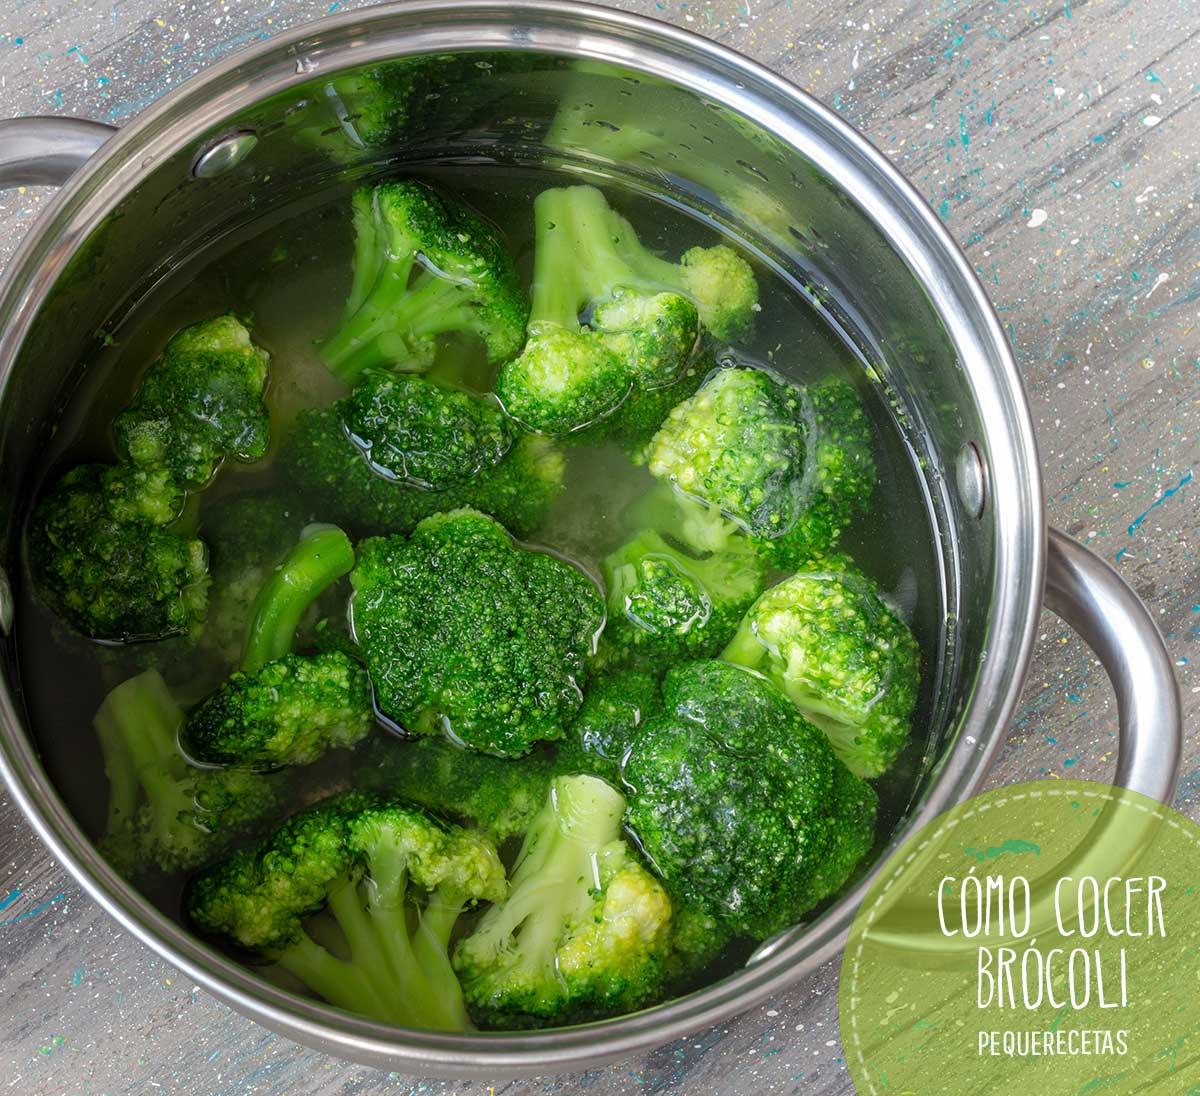 Cómo cocer brócoli (hervido en agua o brócoli al vapor) - PequeRecetas